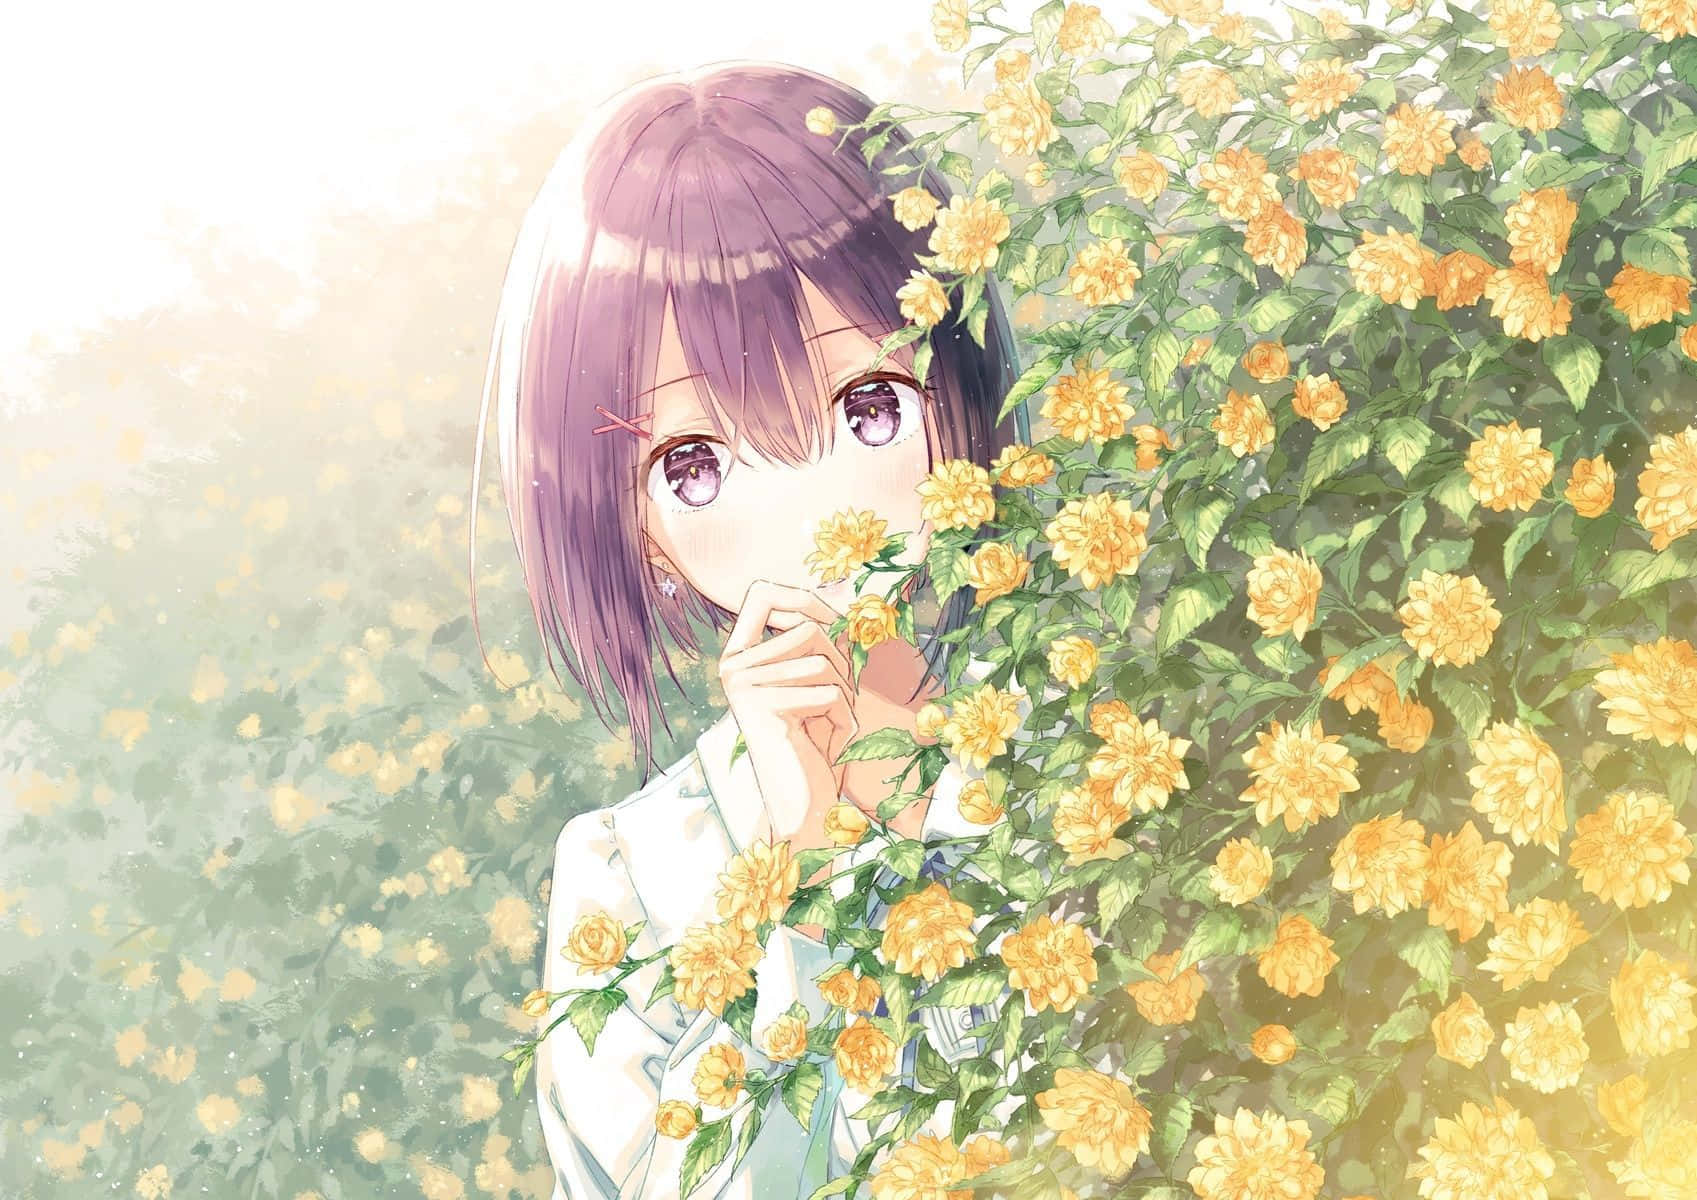 Enmystisk Men Vacker Lila Anime-blomma. Wallpaper